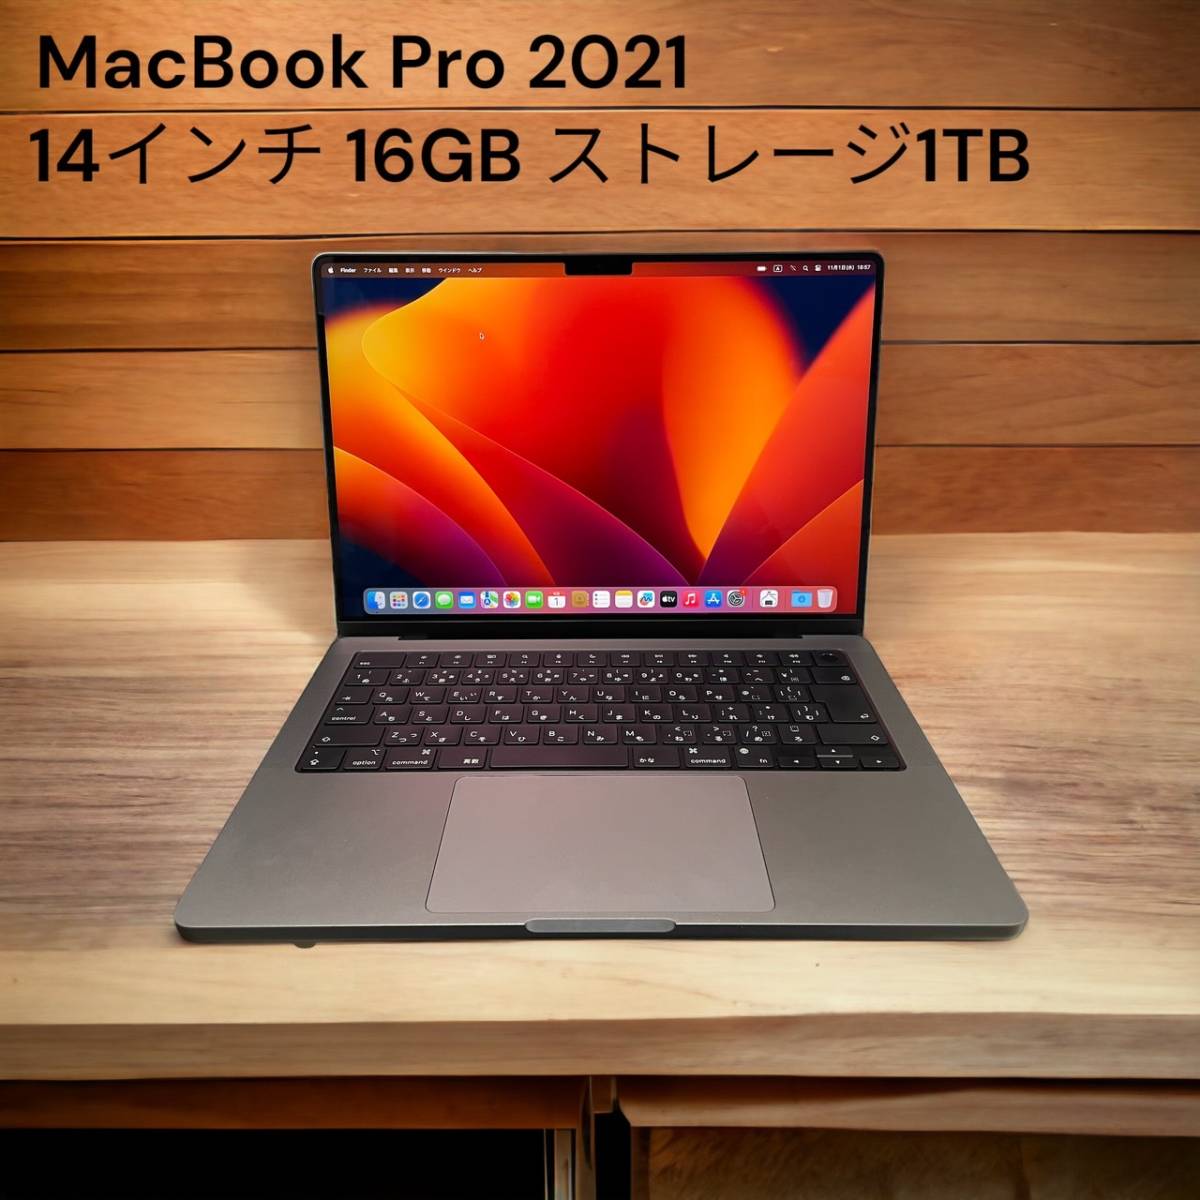 Macbook pro 2021 M1 pro 16GB 512GB バッテリー100％充放電回数19回14 